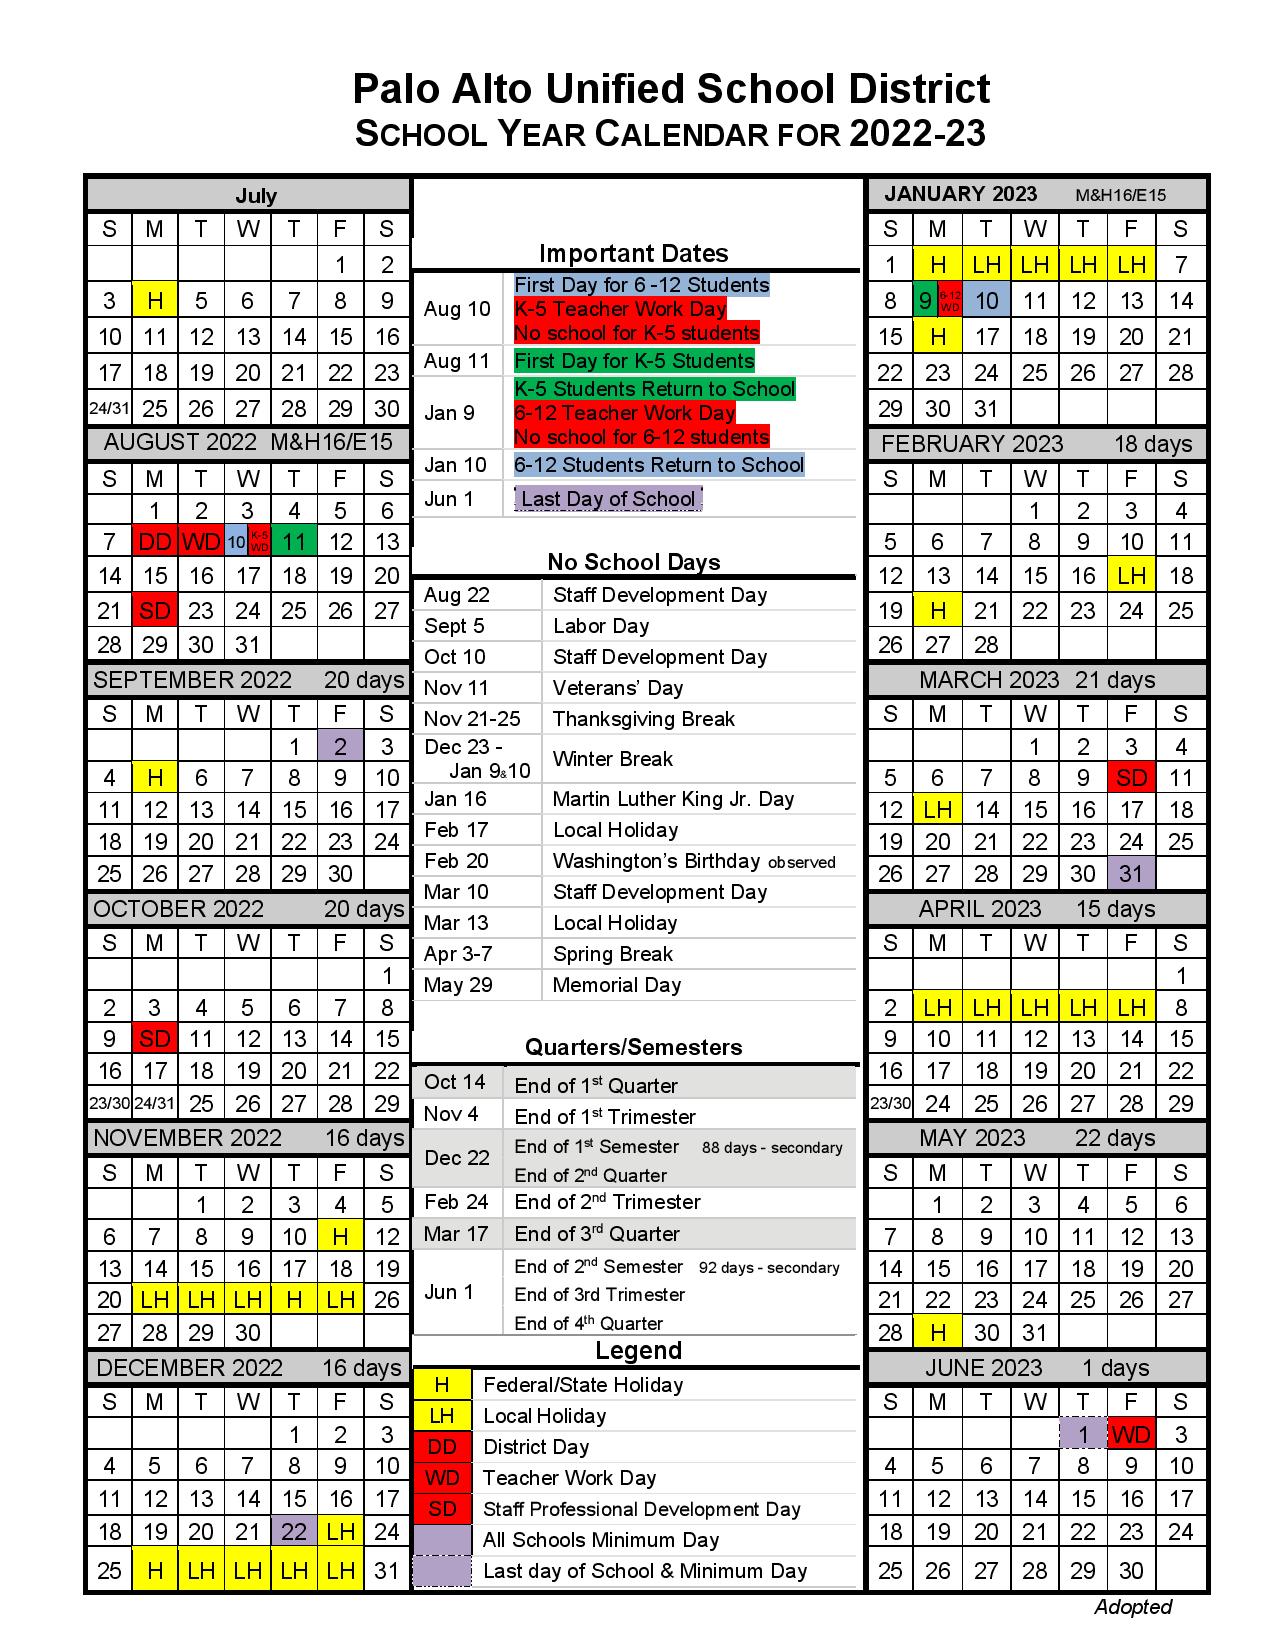 Palo Alto Unified School District Calendar 2022-2023